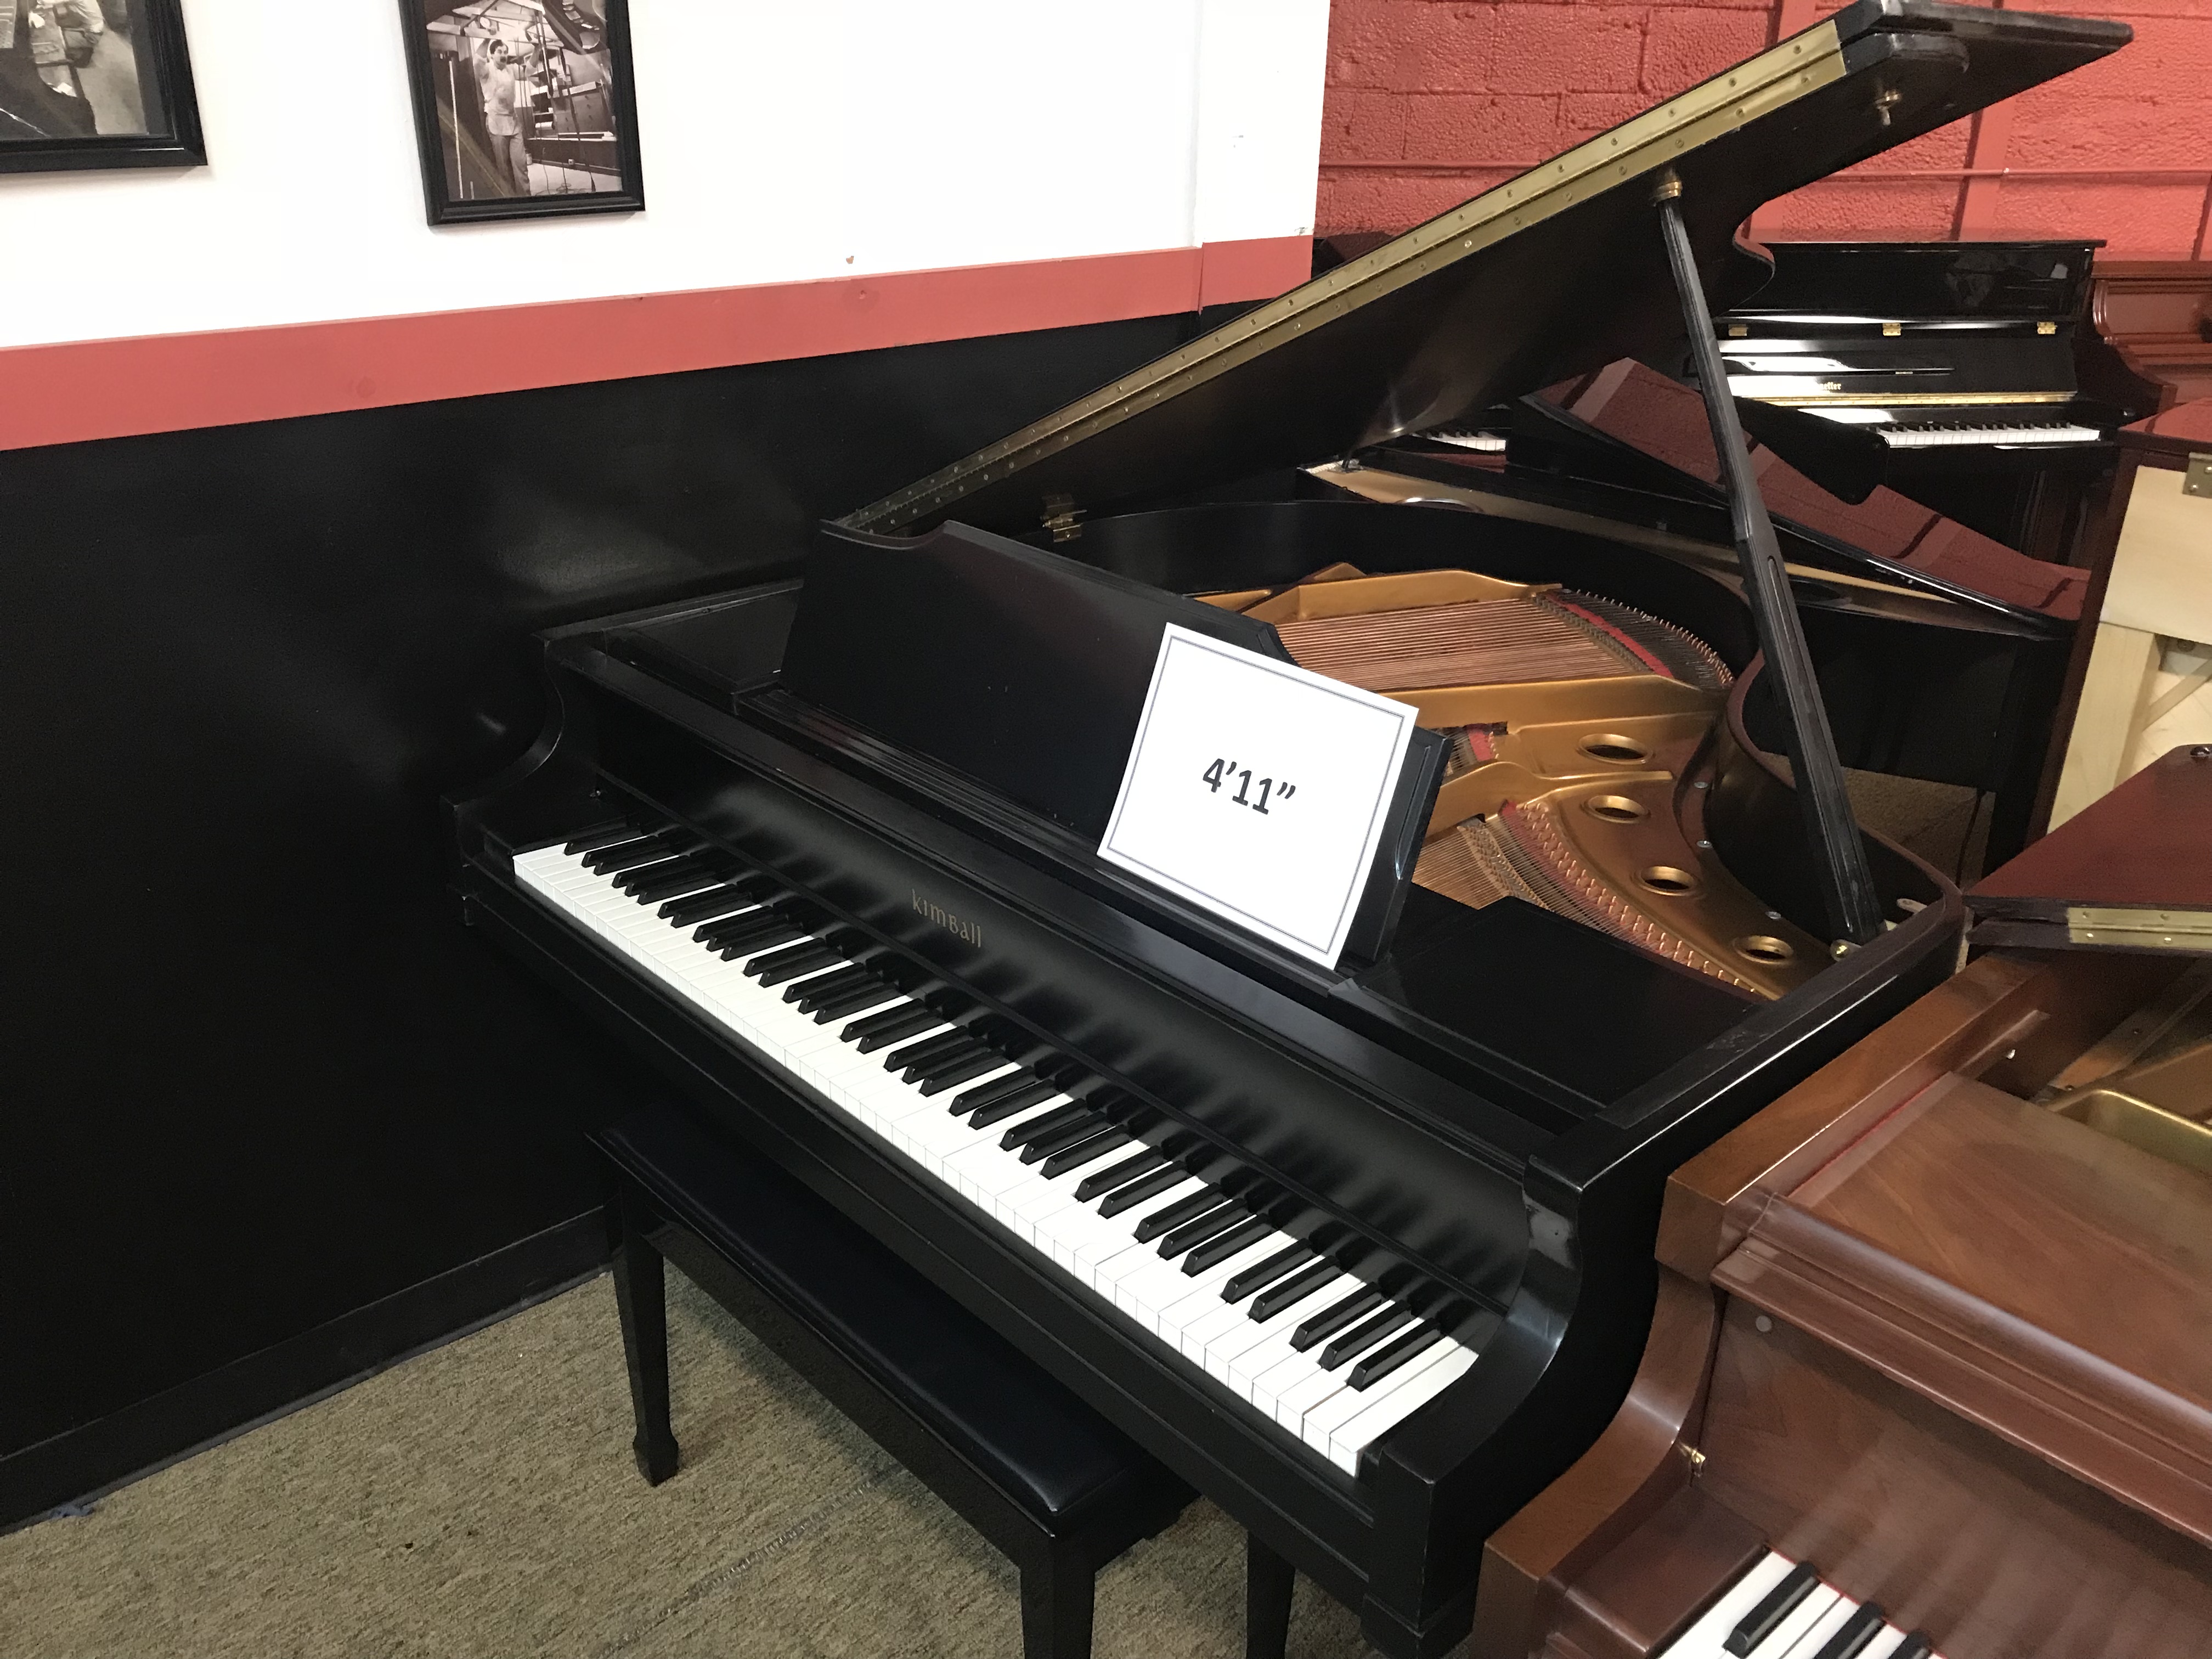 eisenberg piano serial number